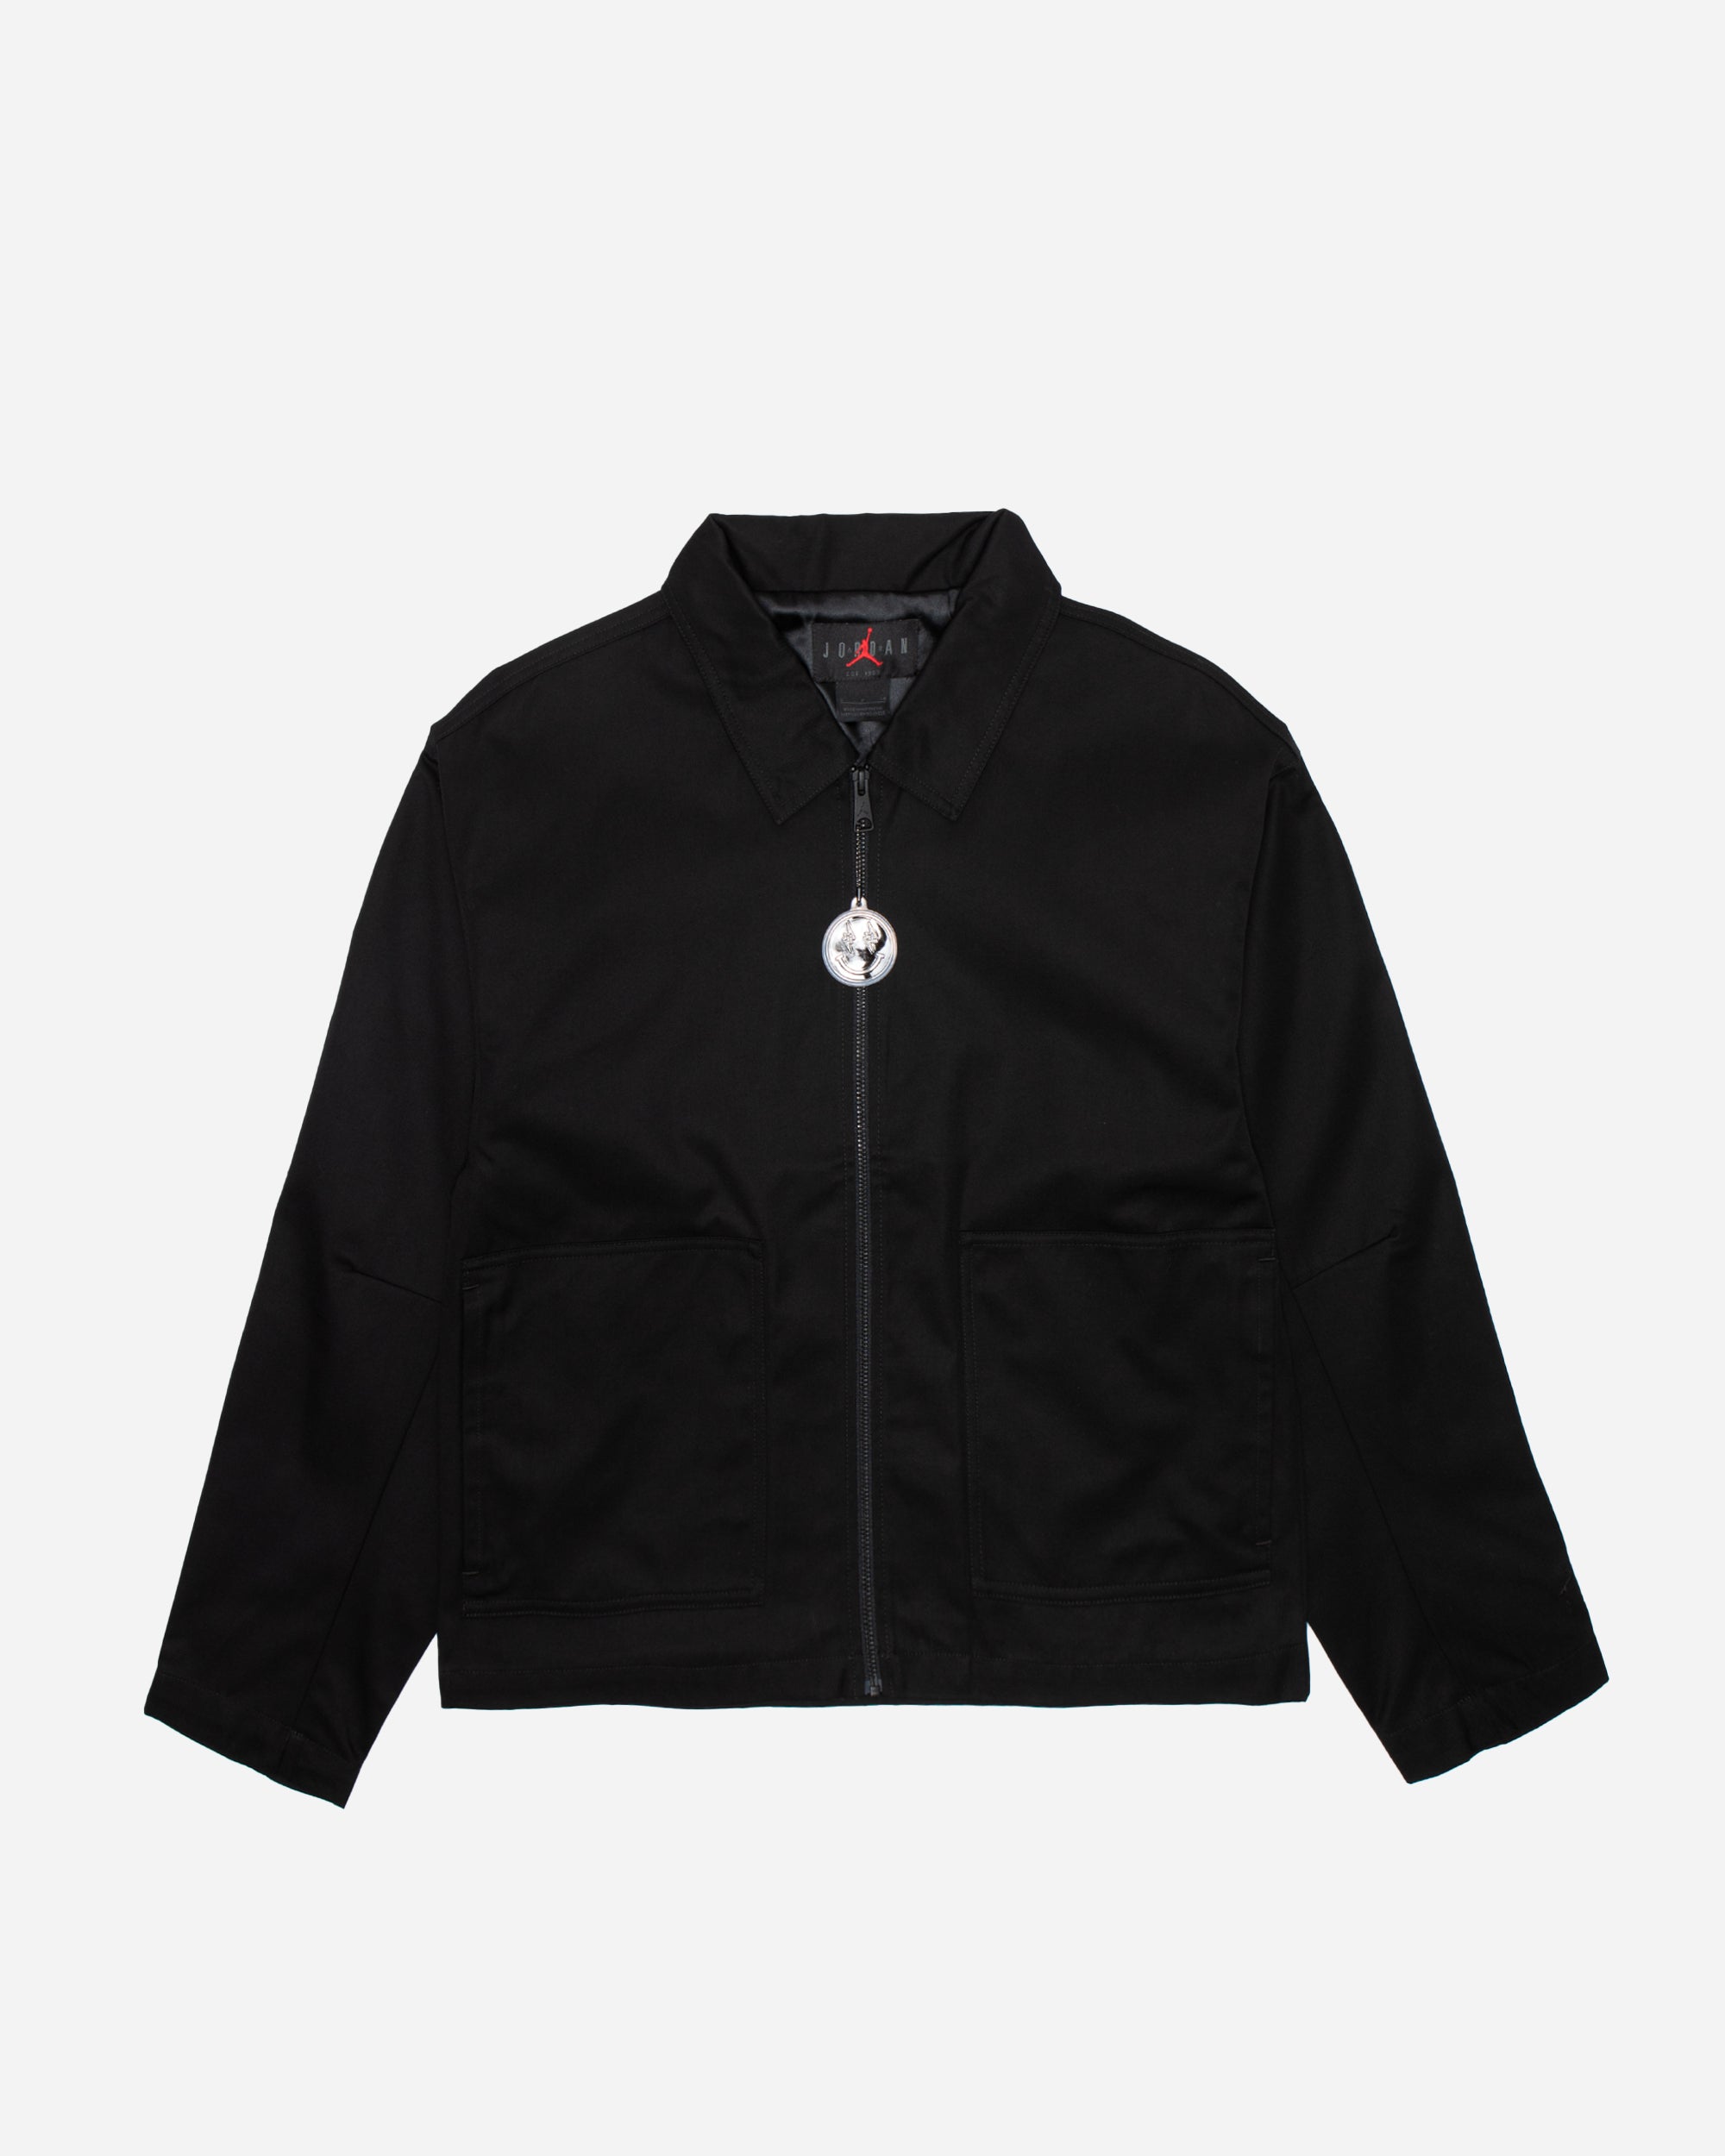 Jordan Brand Jordan x J Balvin Woven Jacket BLACK FJ6135-010